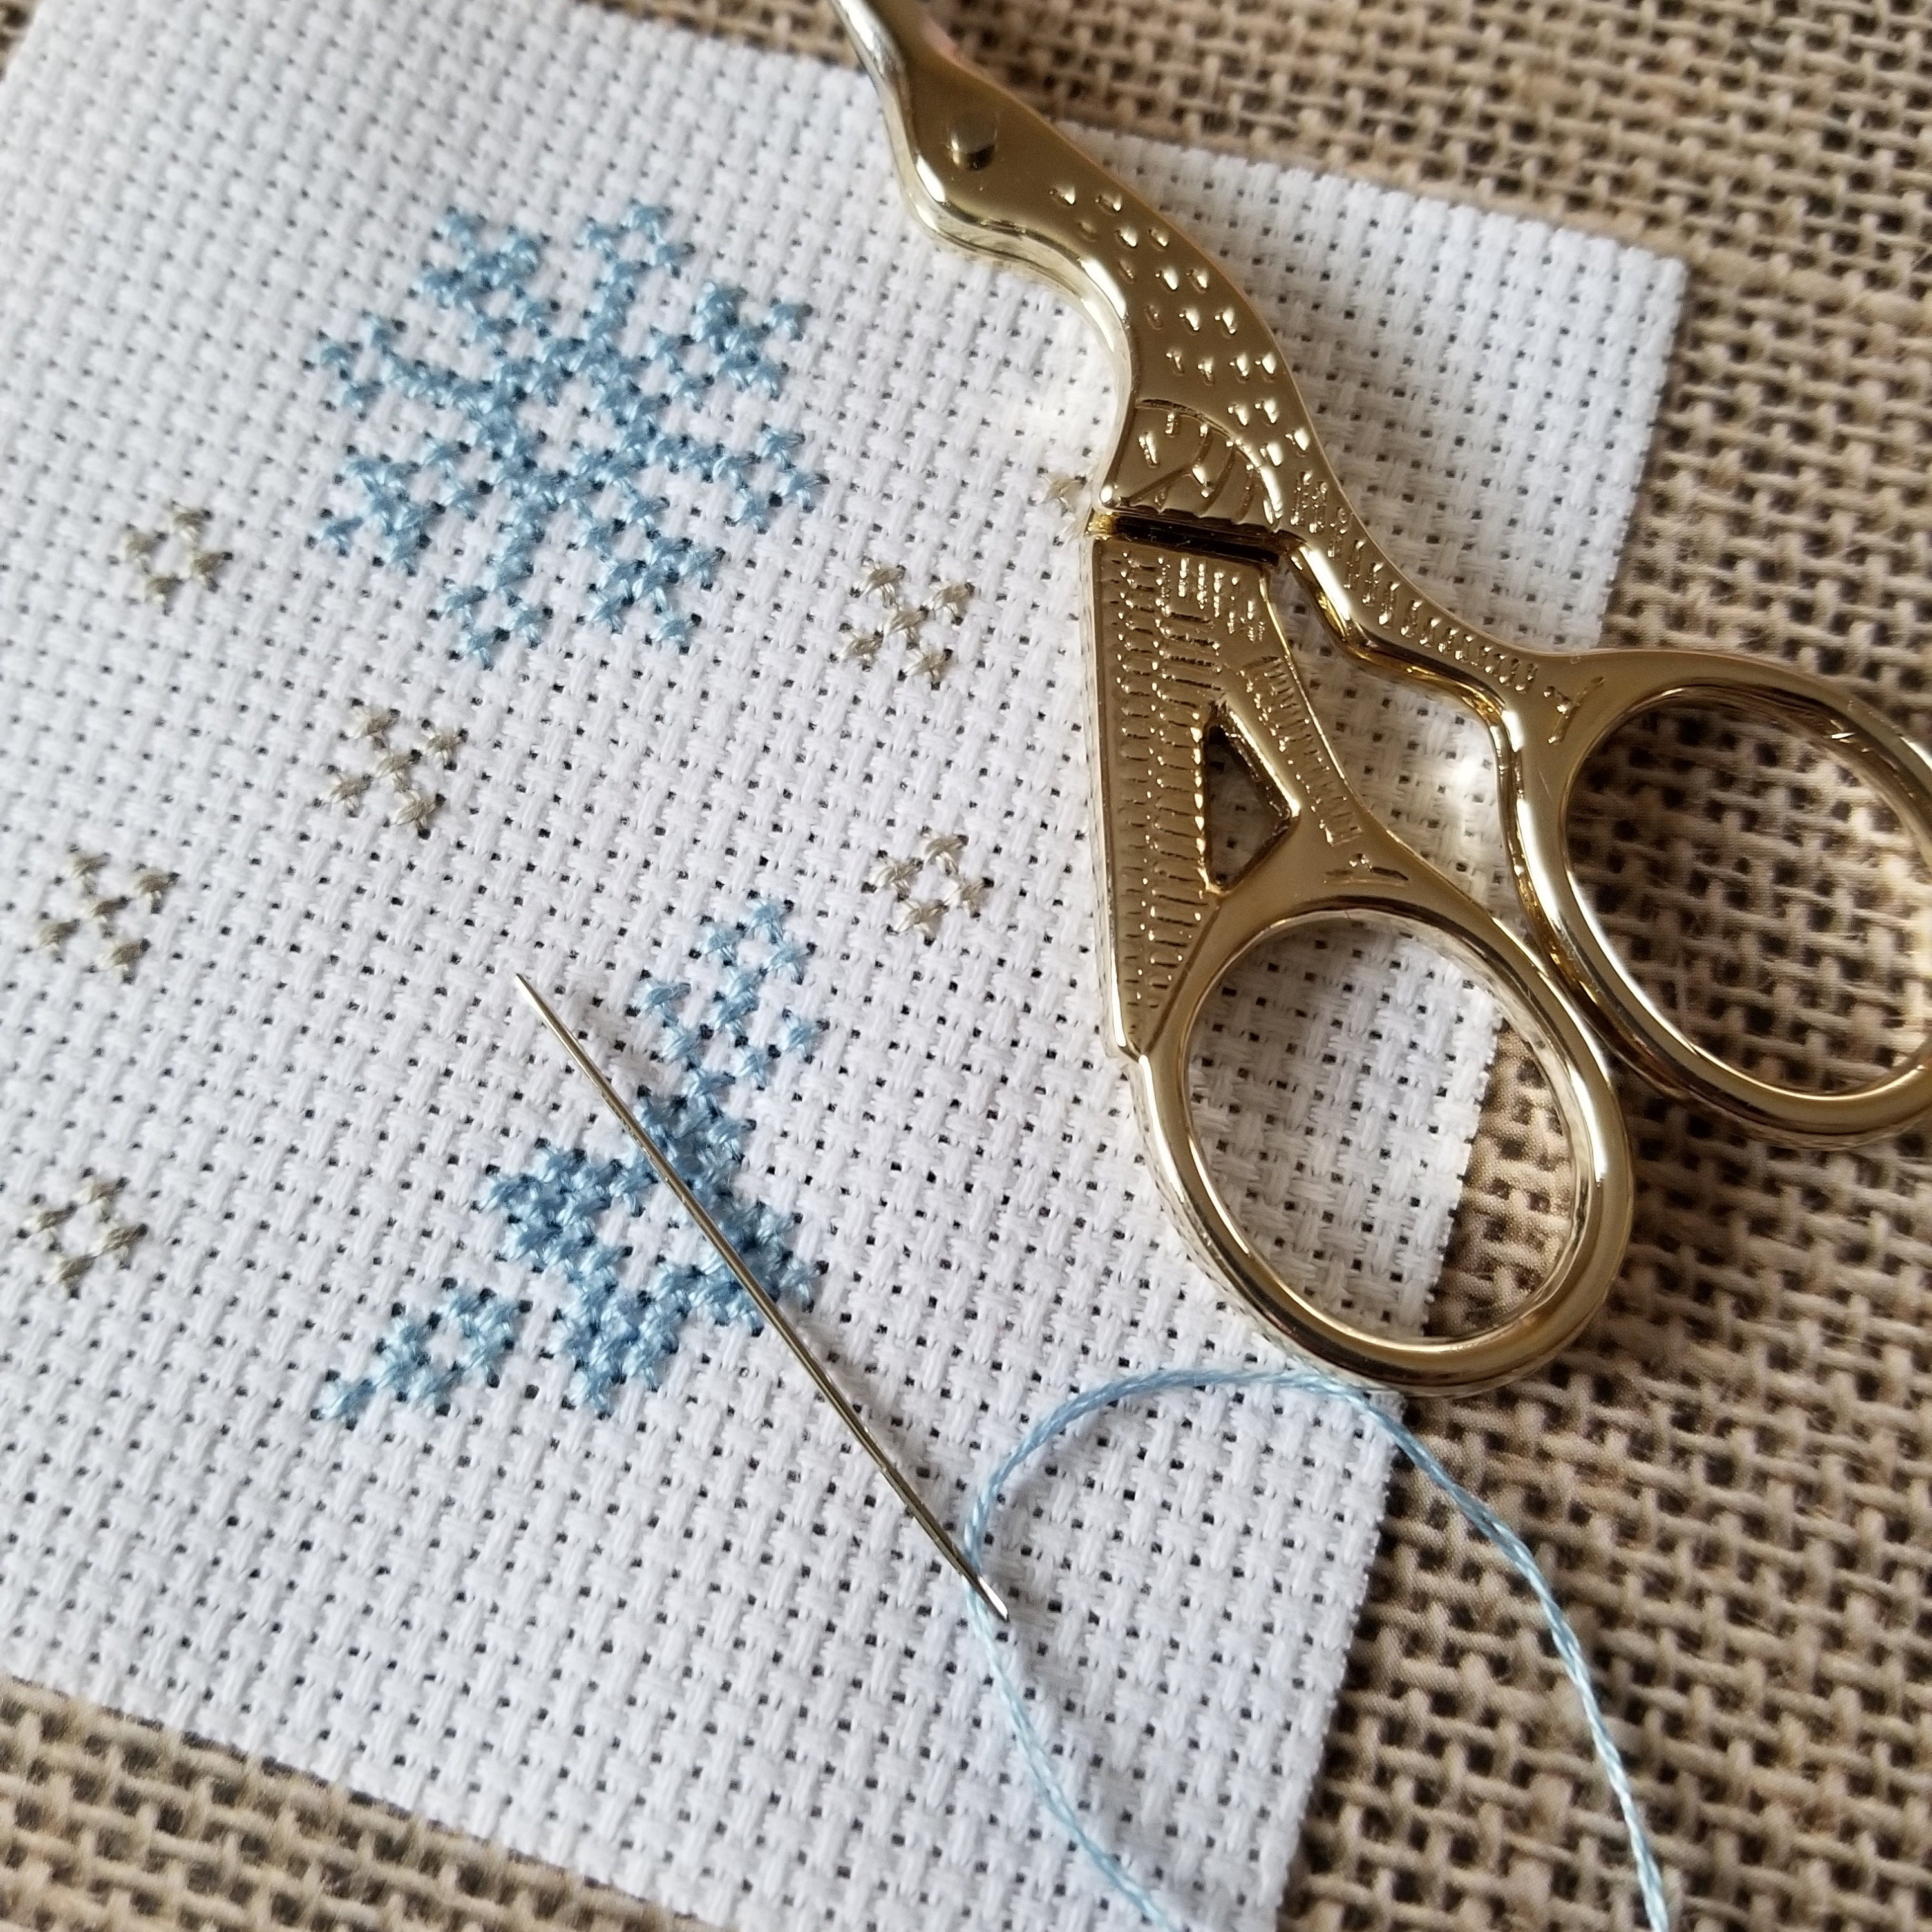 Hello Winter cross stitch kit